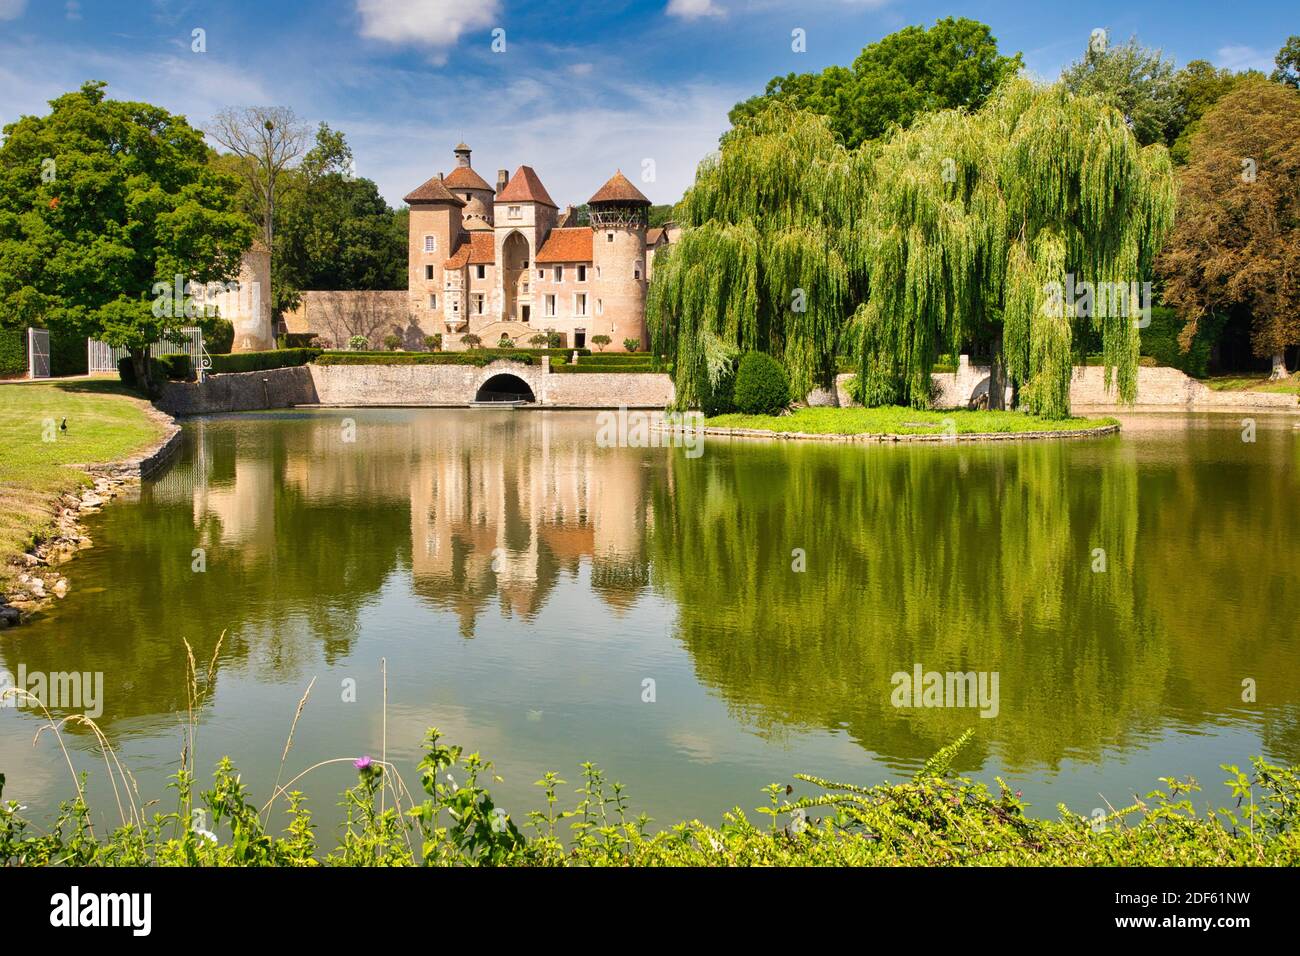 Castle of Sercy, Saone-et-Loire Department, Burgundy Region, Maconnais Area, France, Europe Stock Photo